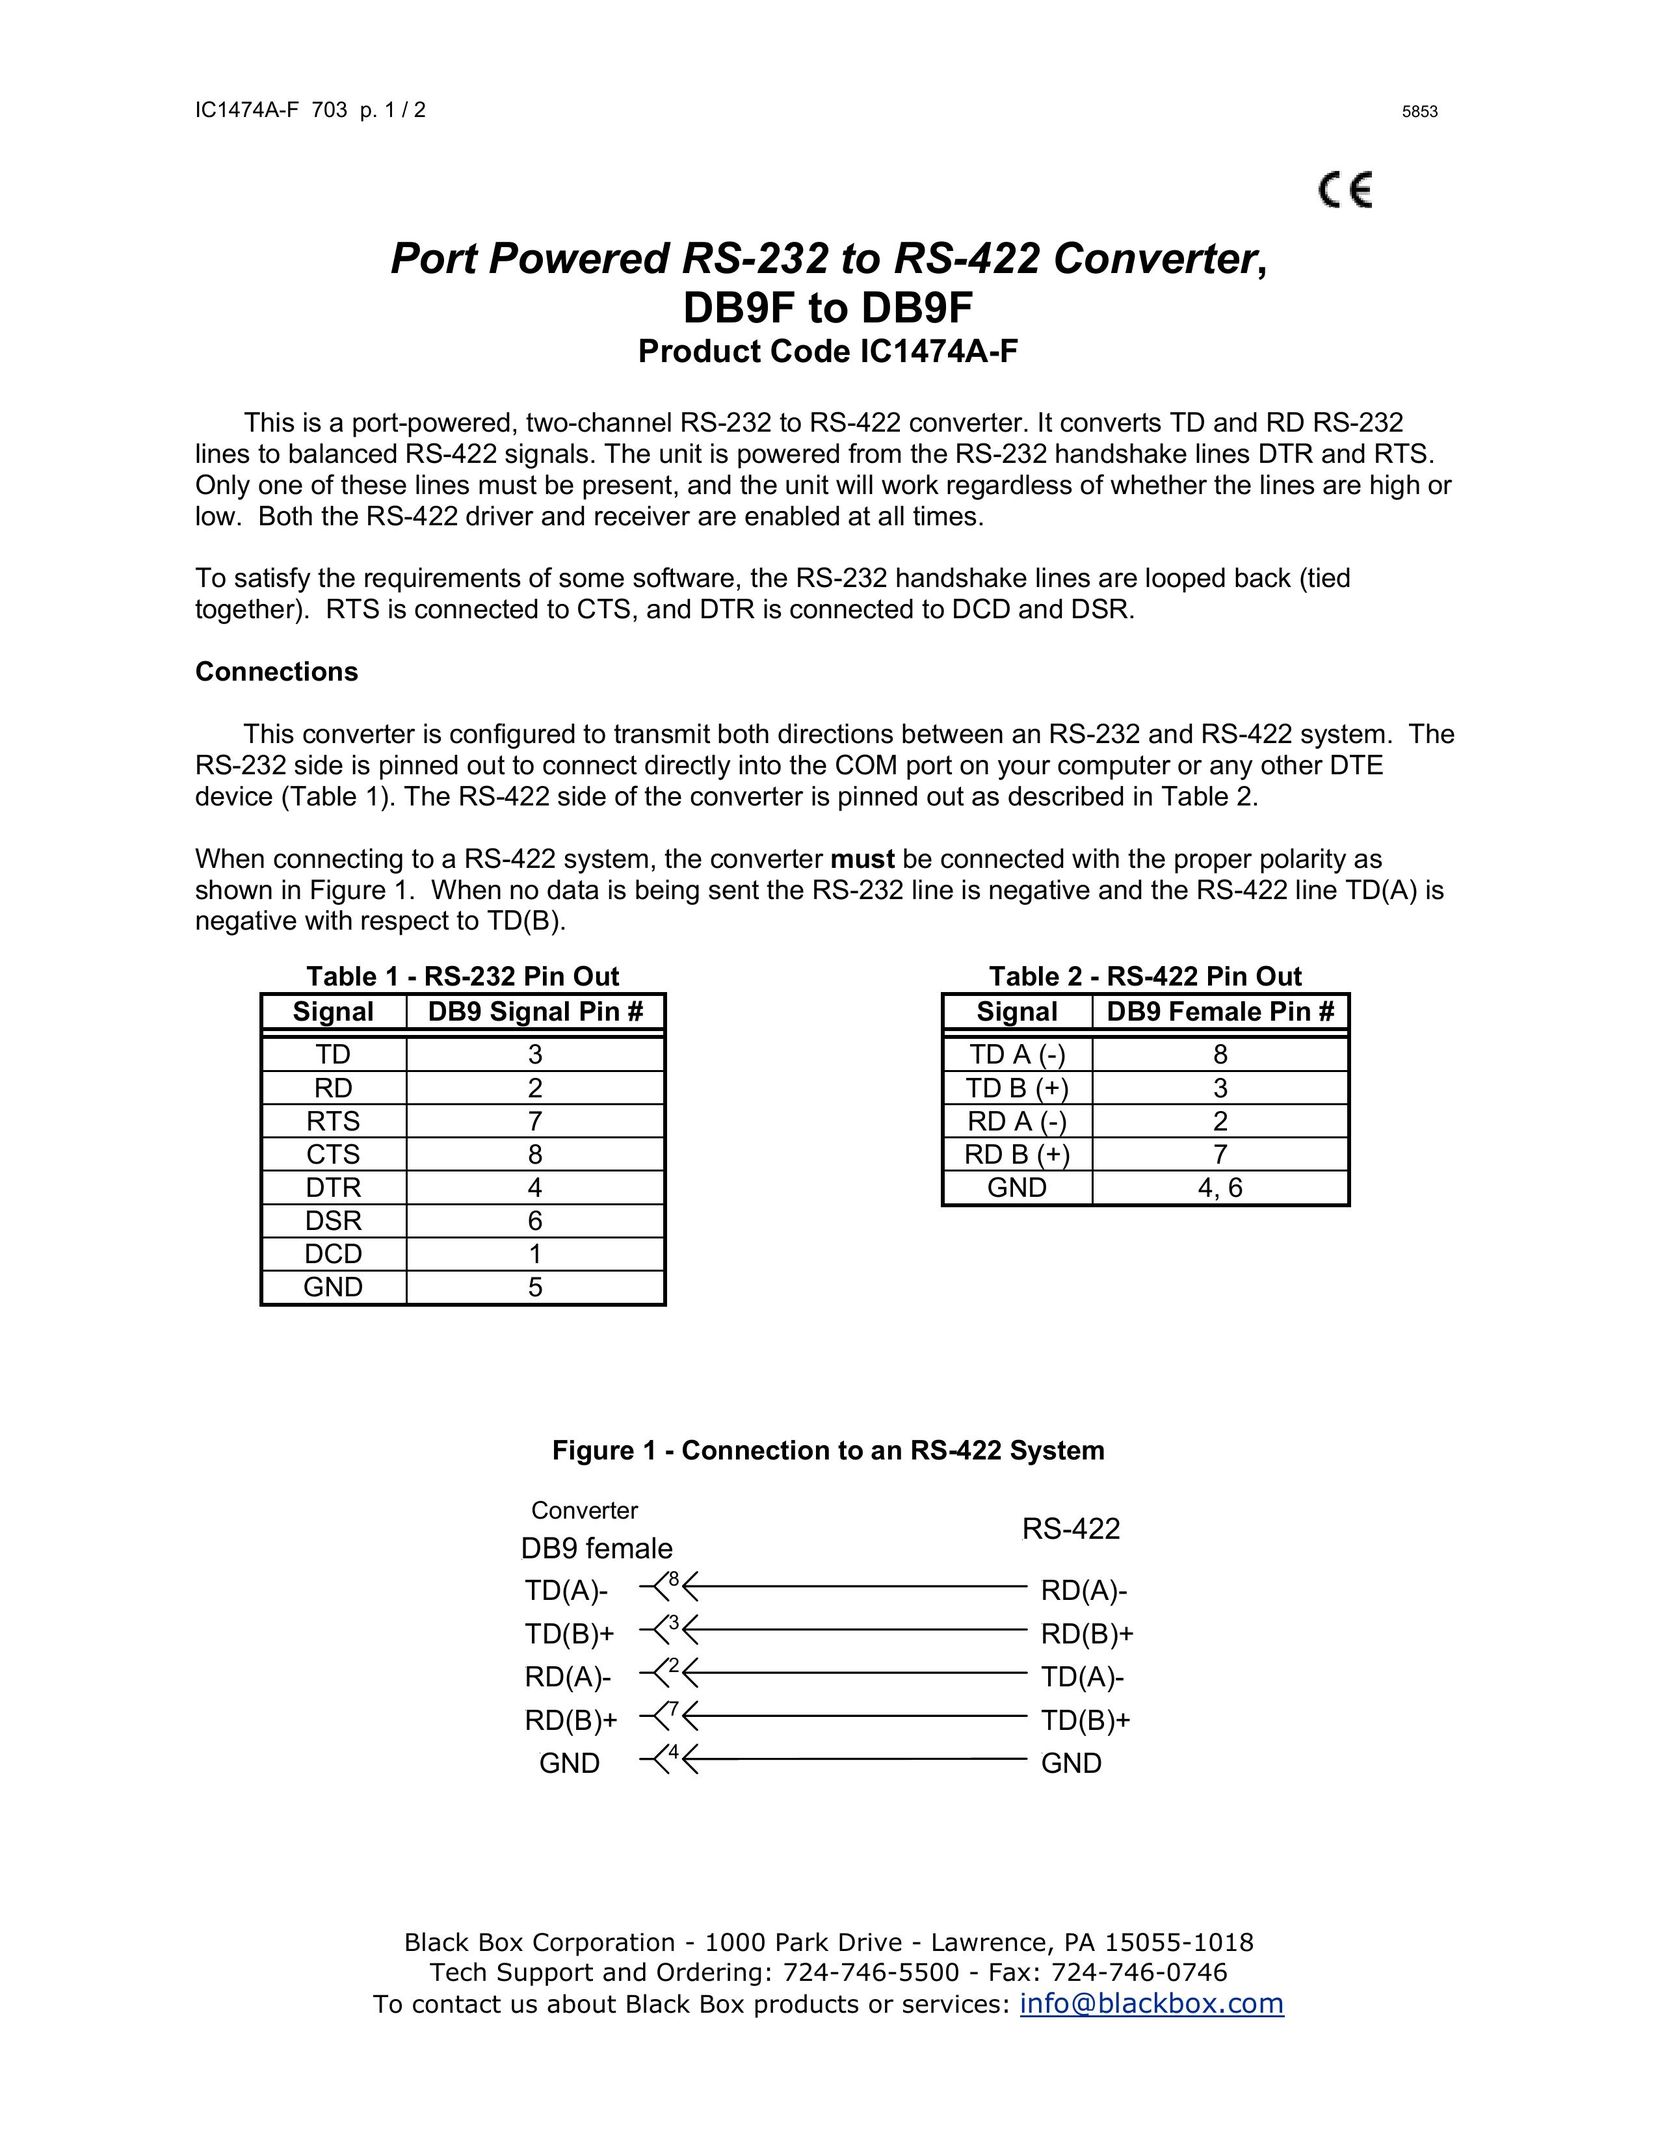 Black Box PORT POWERED RS-232 TO RS-422 CONVERTER, DB94 TO DB94 TV Converter Box User Manual